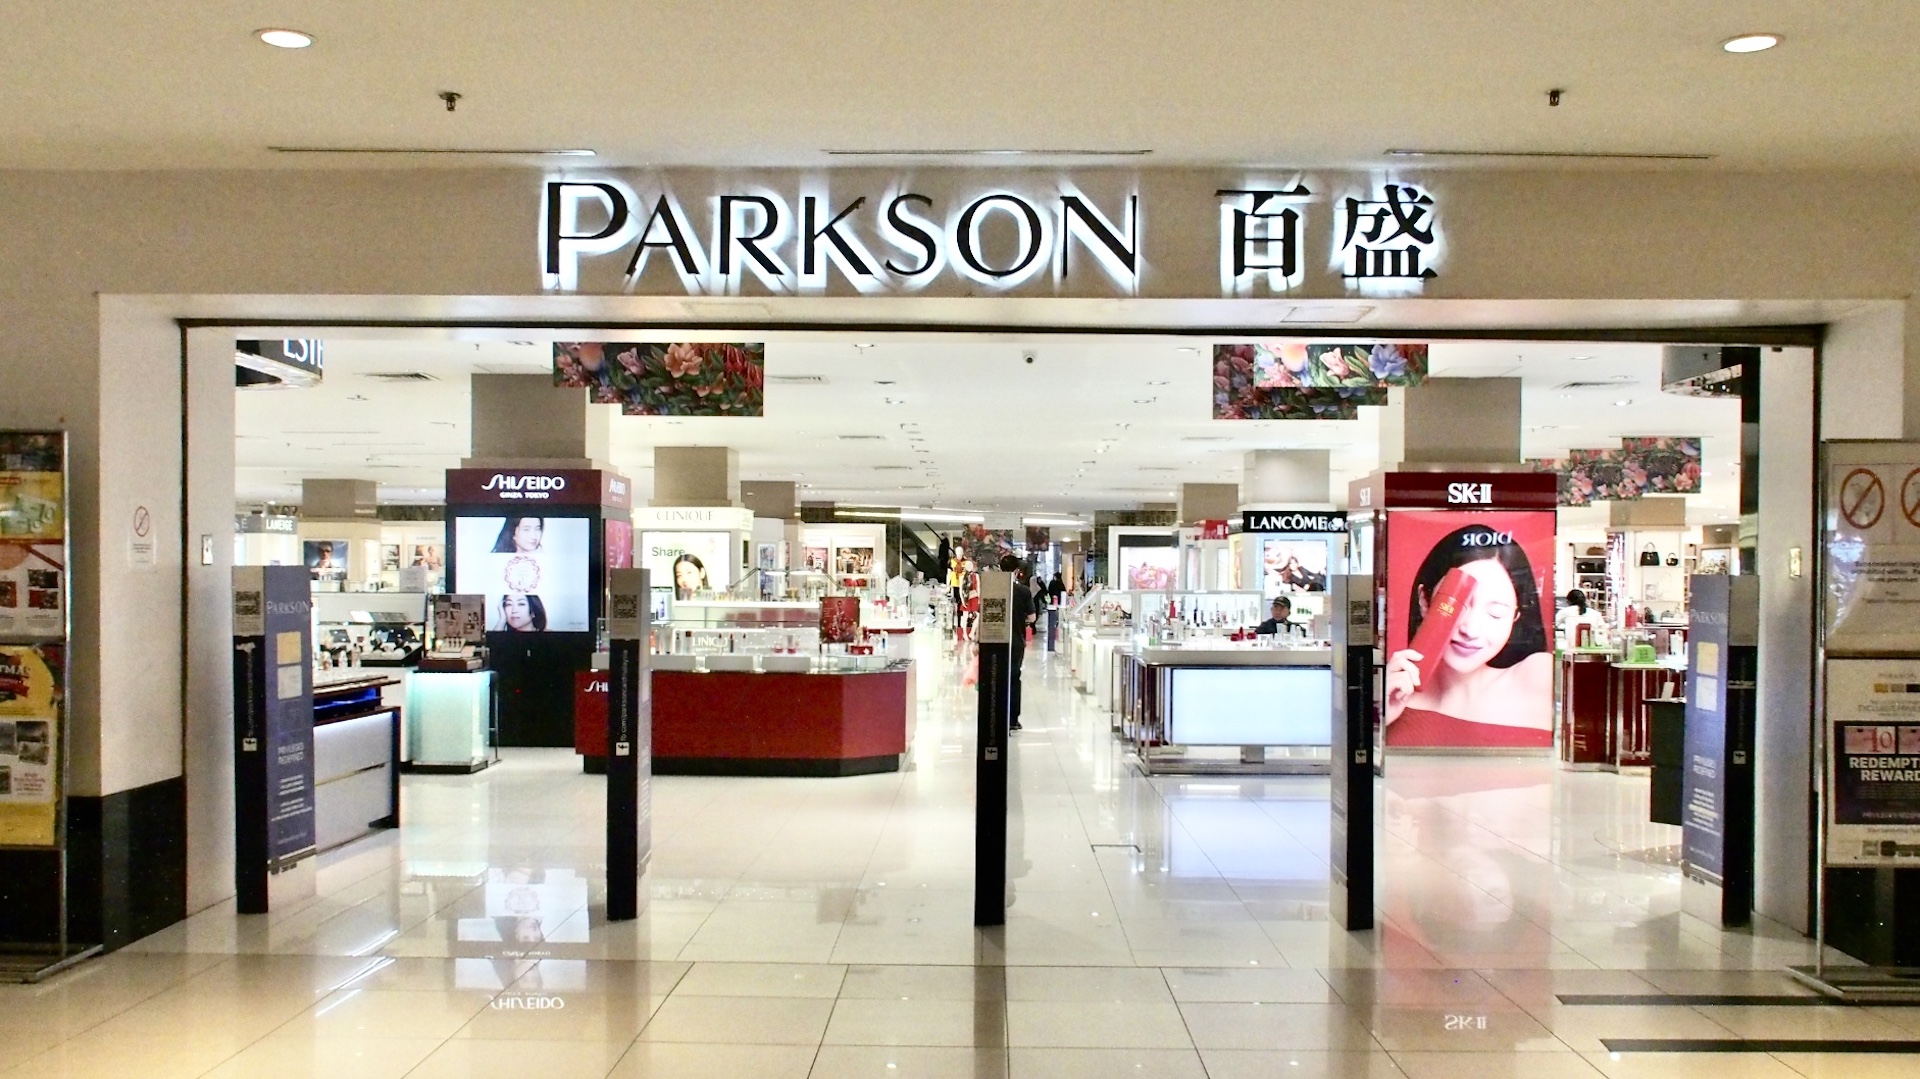 Parkson Malaysia added a new photo. - Parkson Malaysia